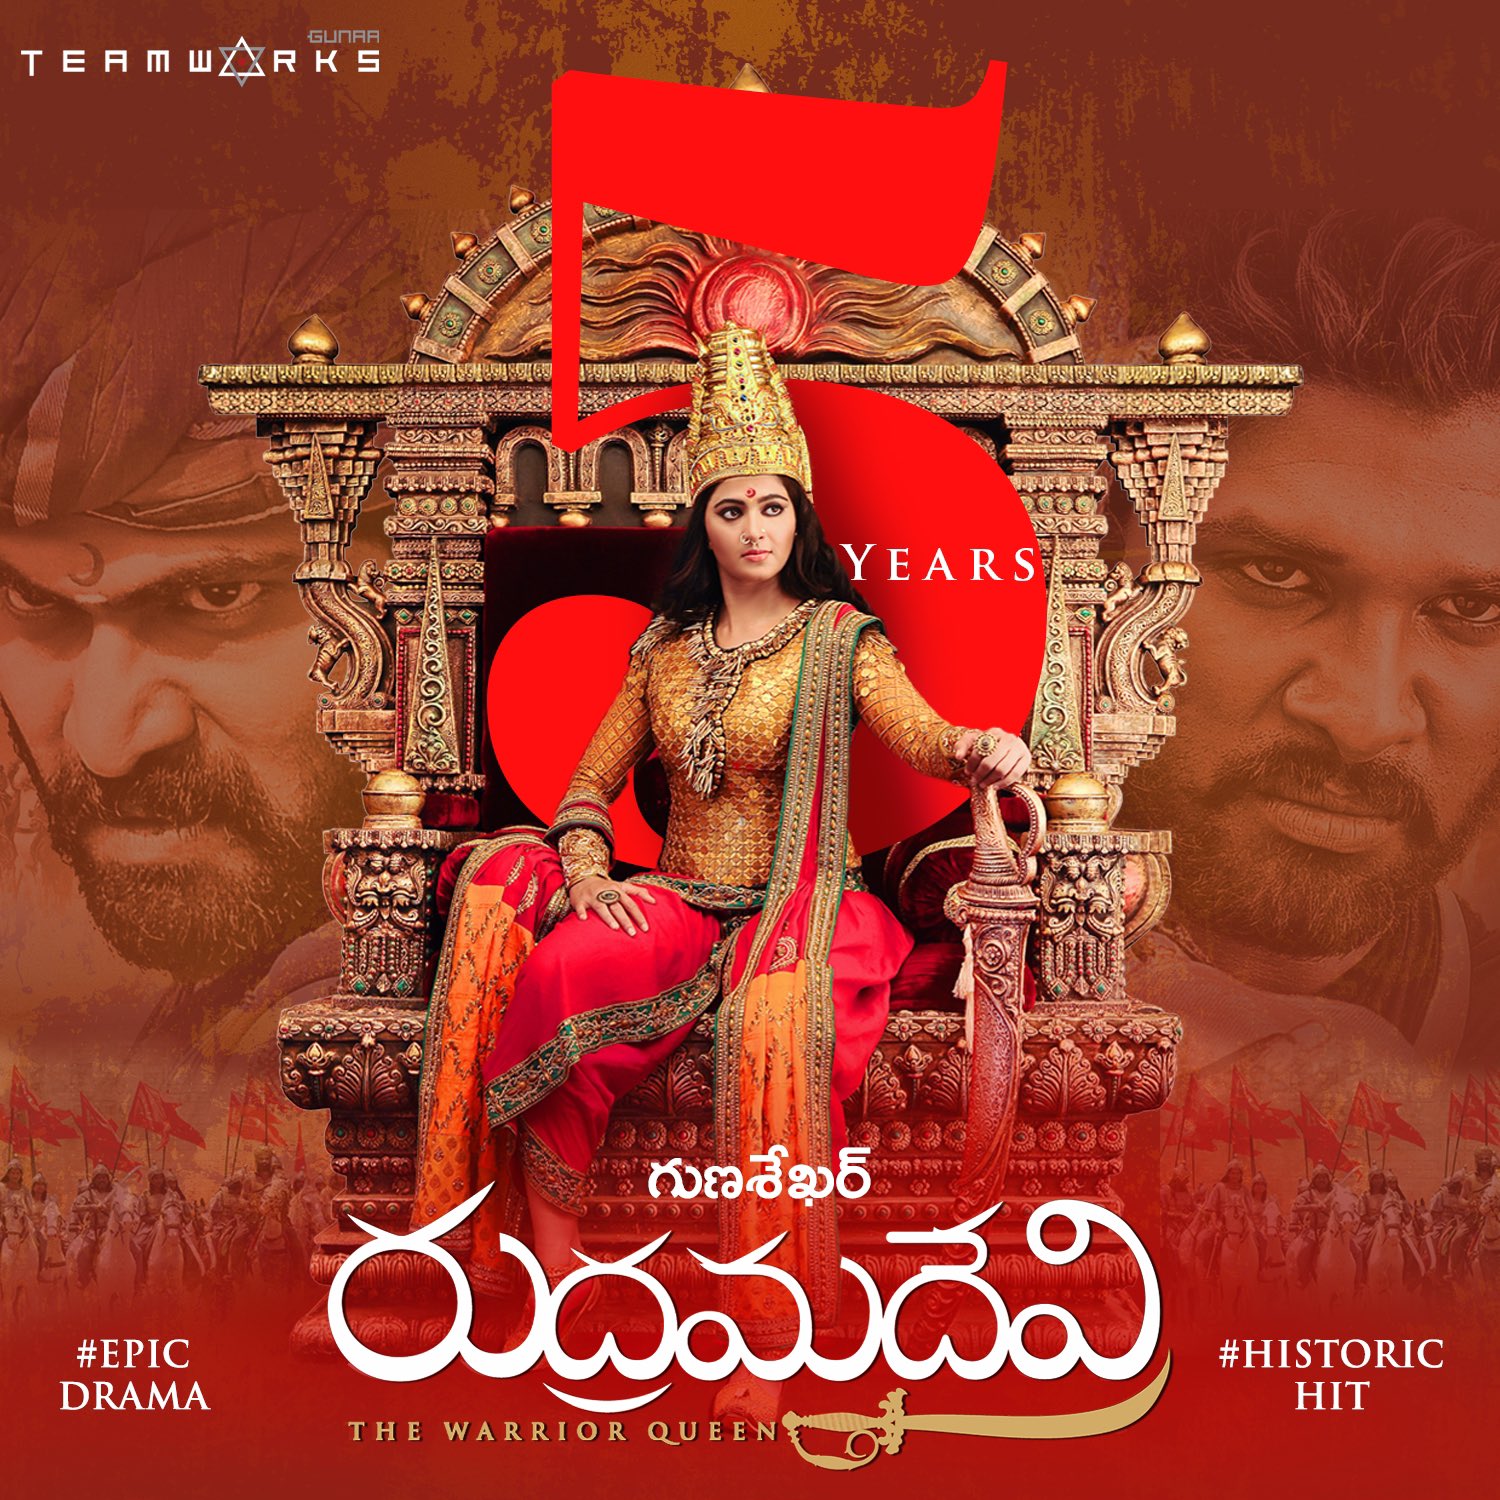 rudramadevi movie completes 5 years